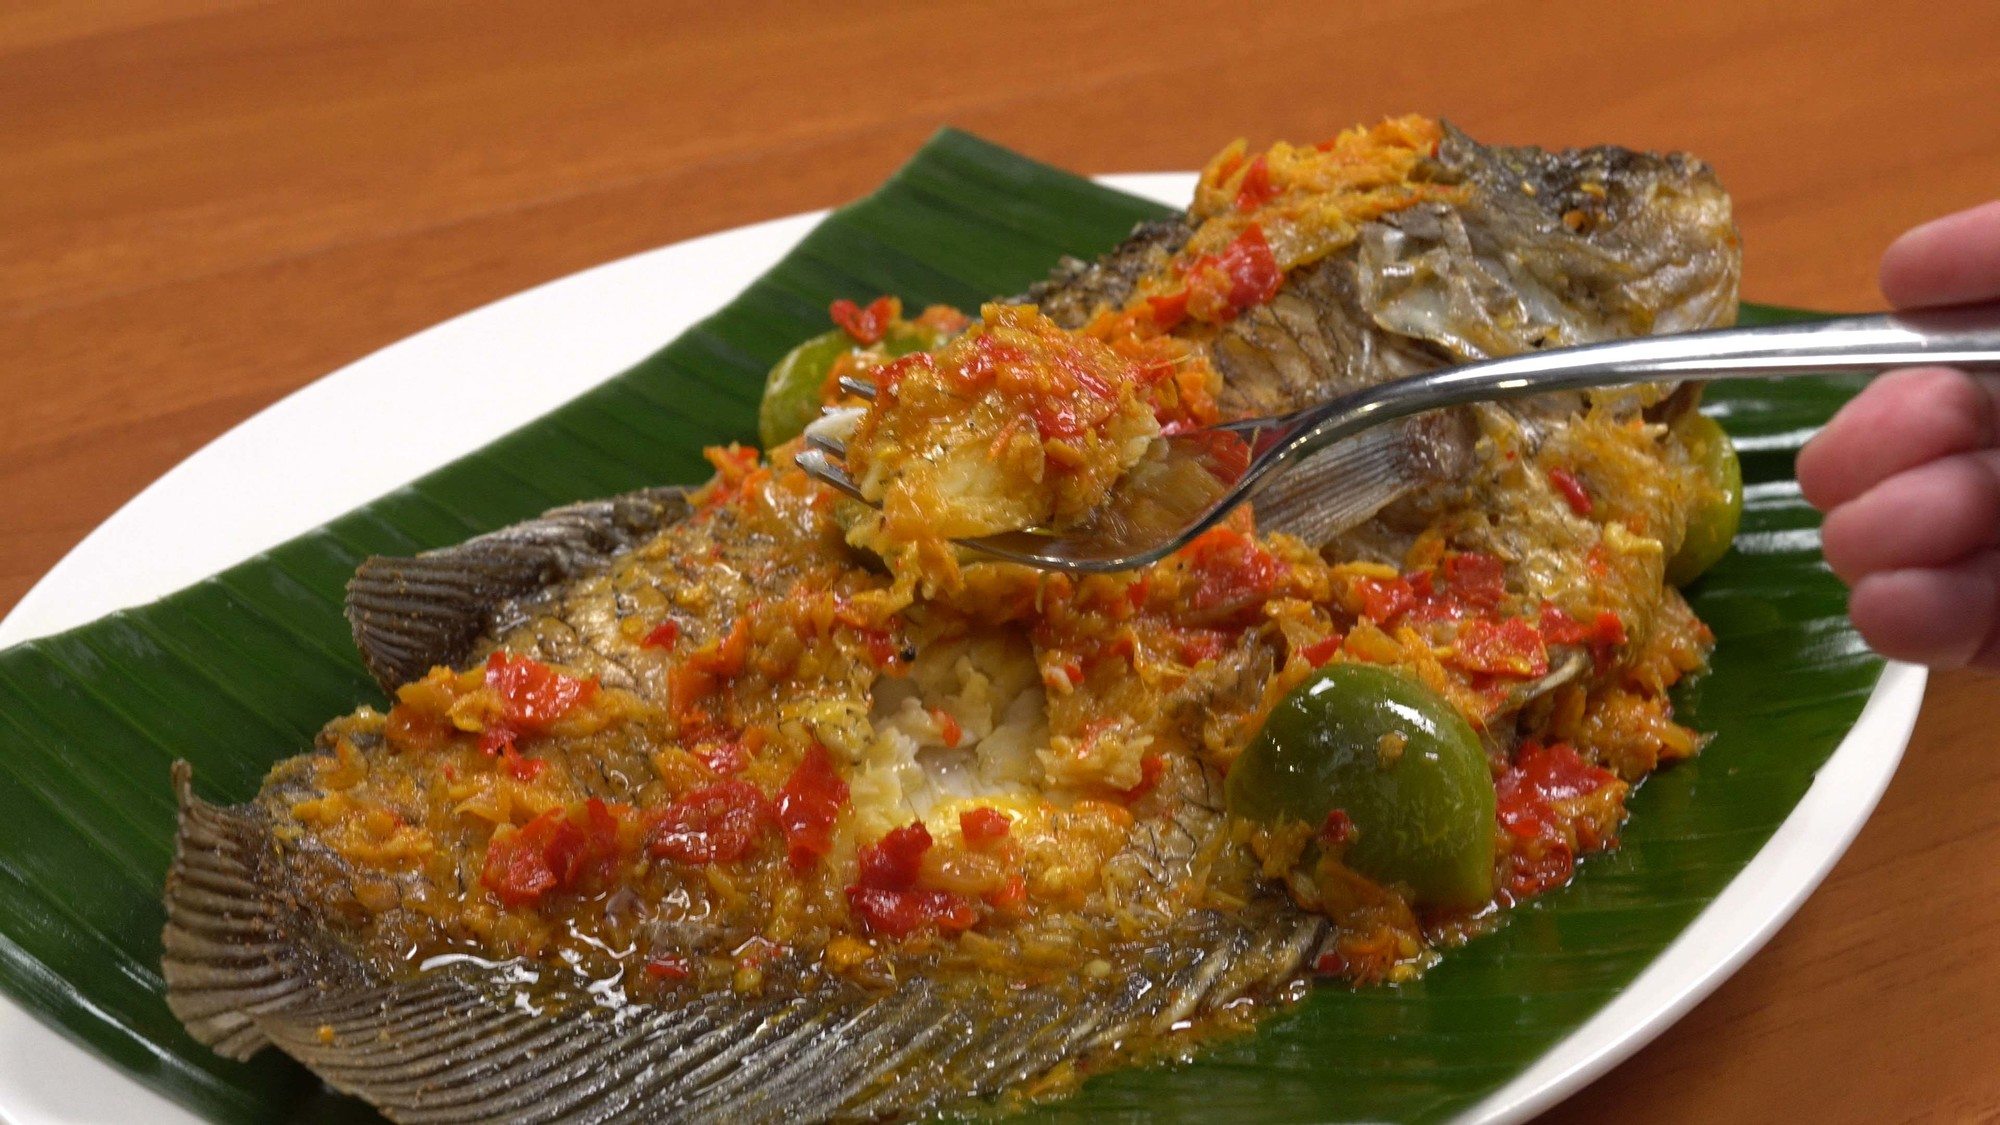 Resep Pecak Ikan Gurame untuk Makan Siang - Masak Apa Hari Ini?